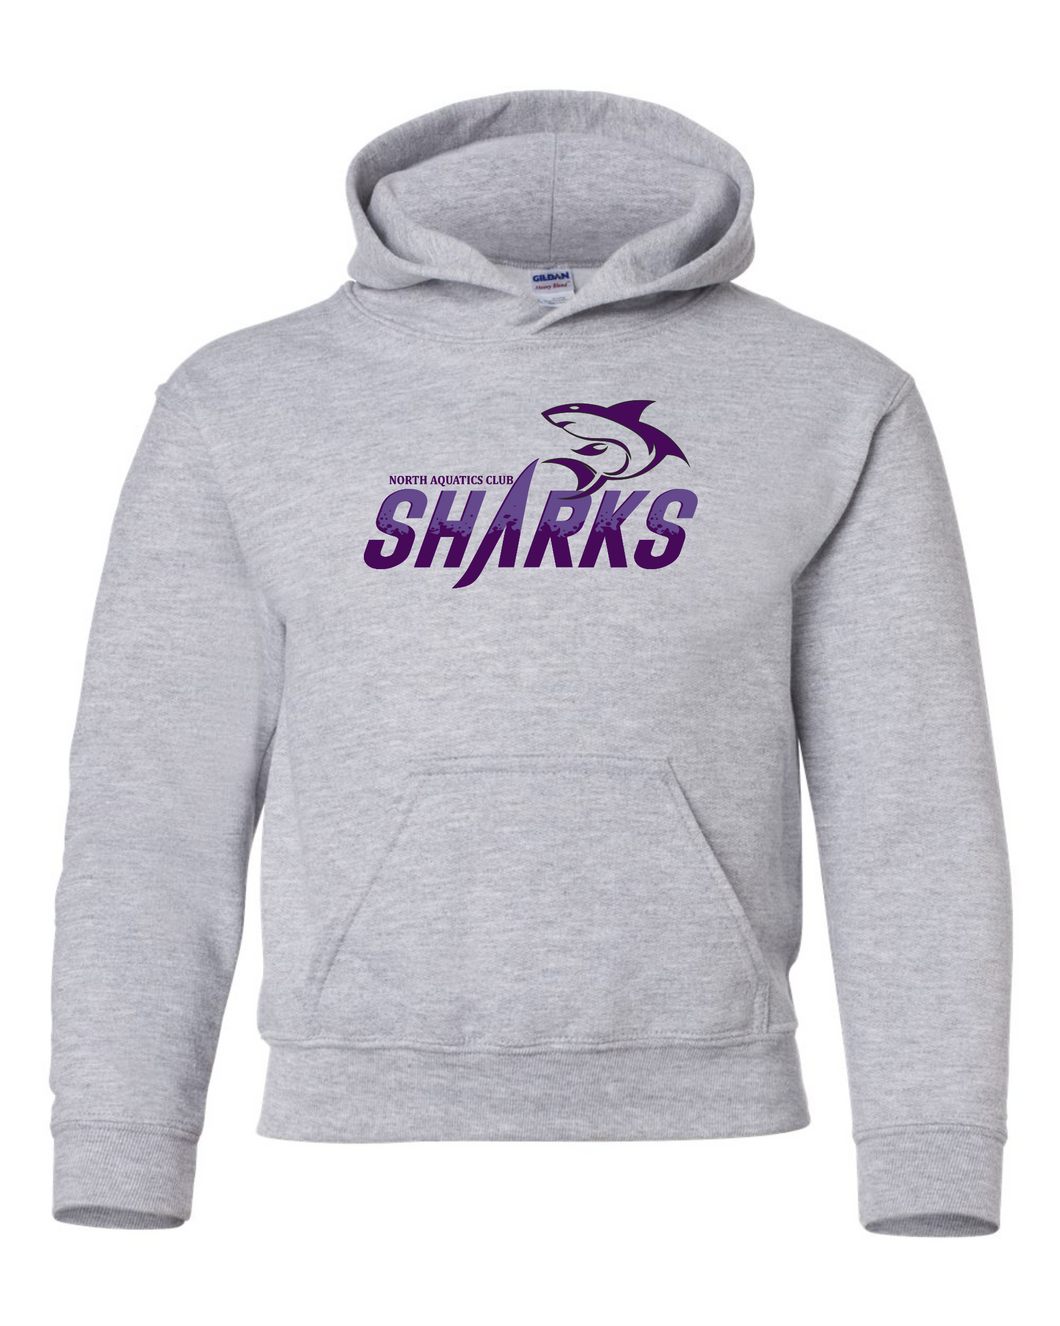 Sharks - Full Color Shark Logo -  Hoodie - Sport Grey     FCS